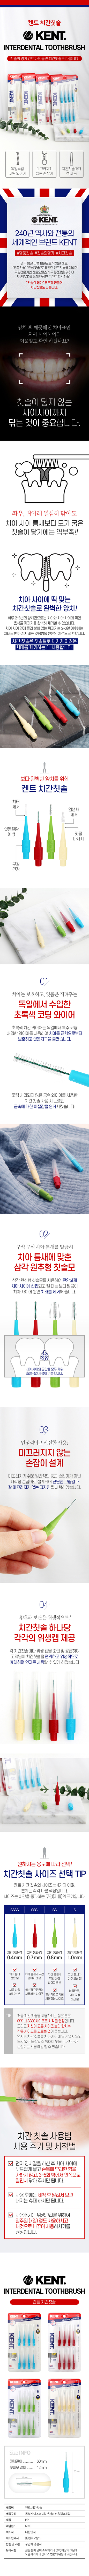 kent_Interdental_Toothbrush_8p_D.jpg